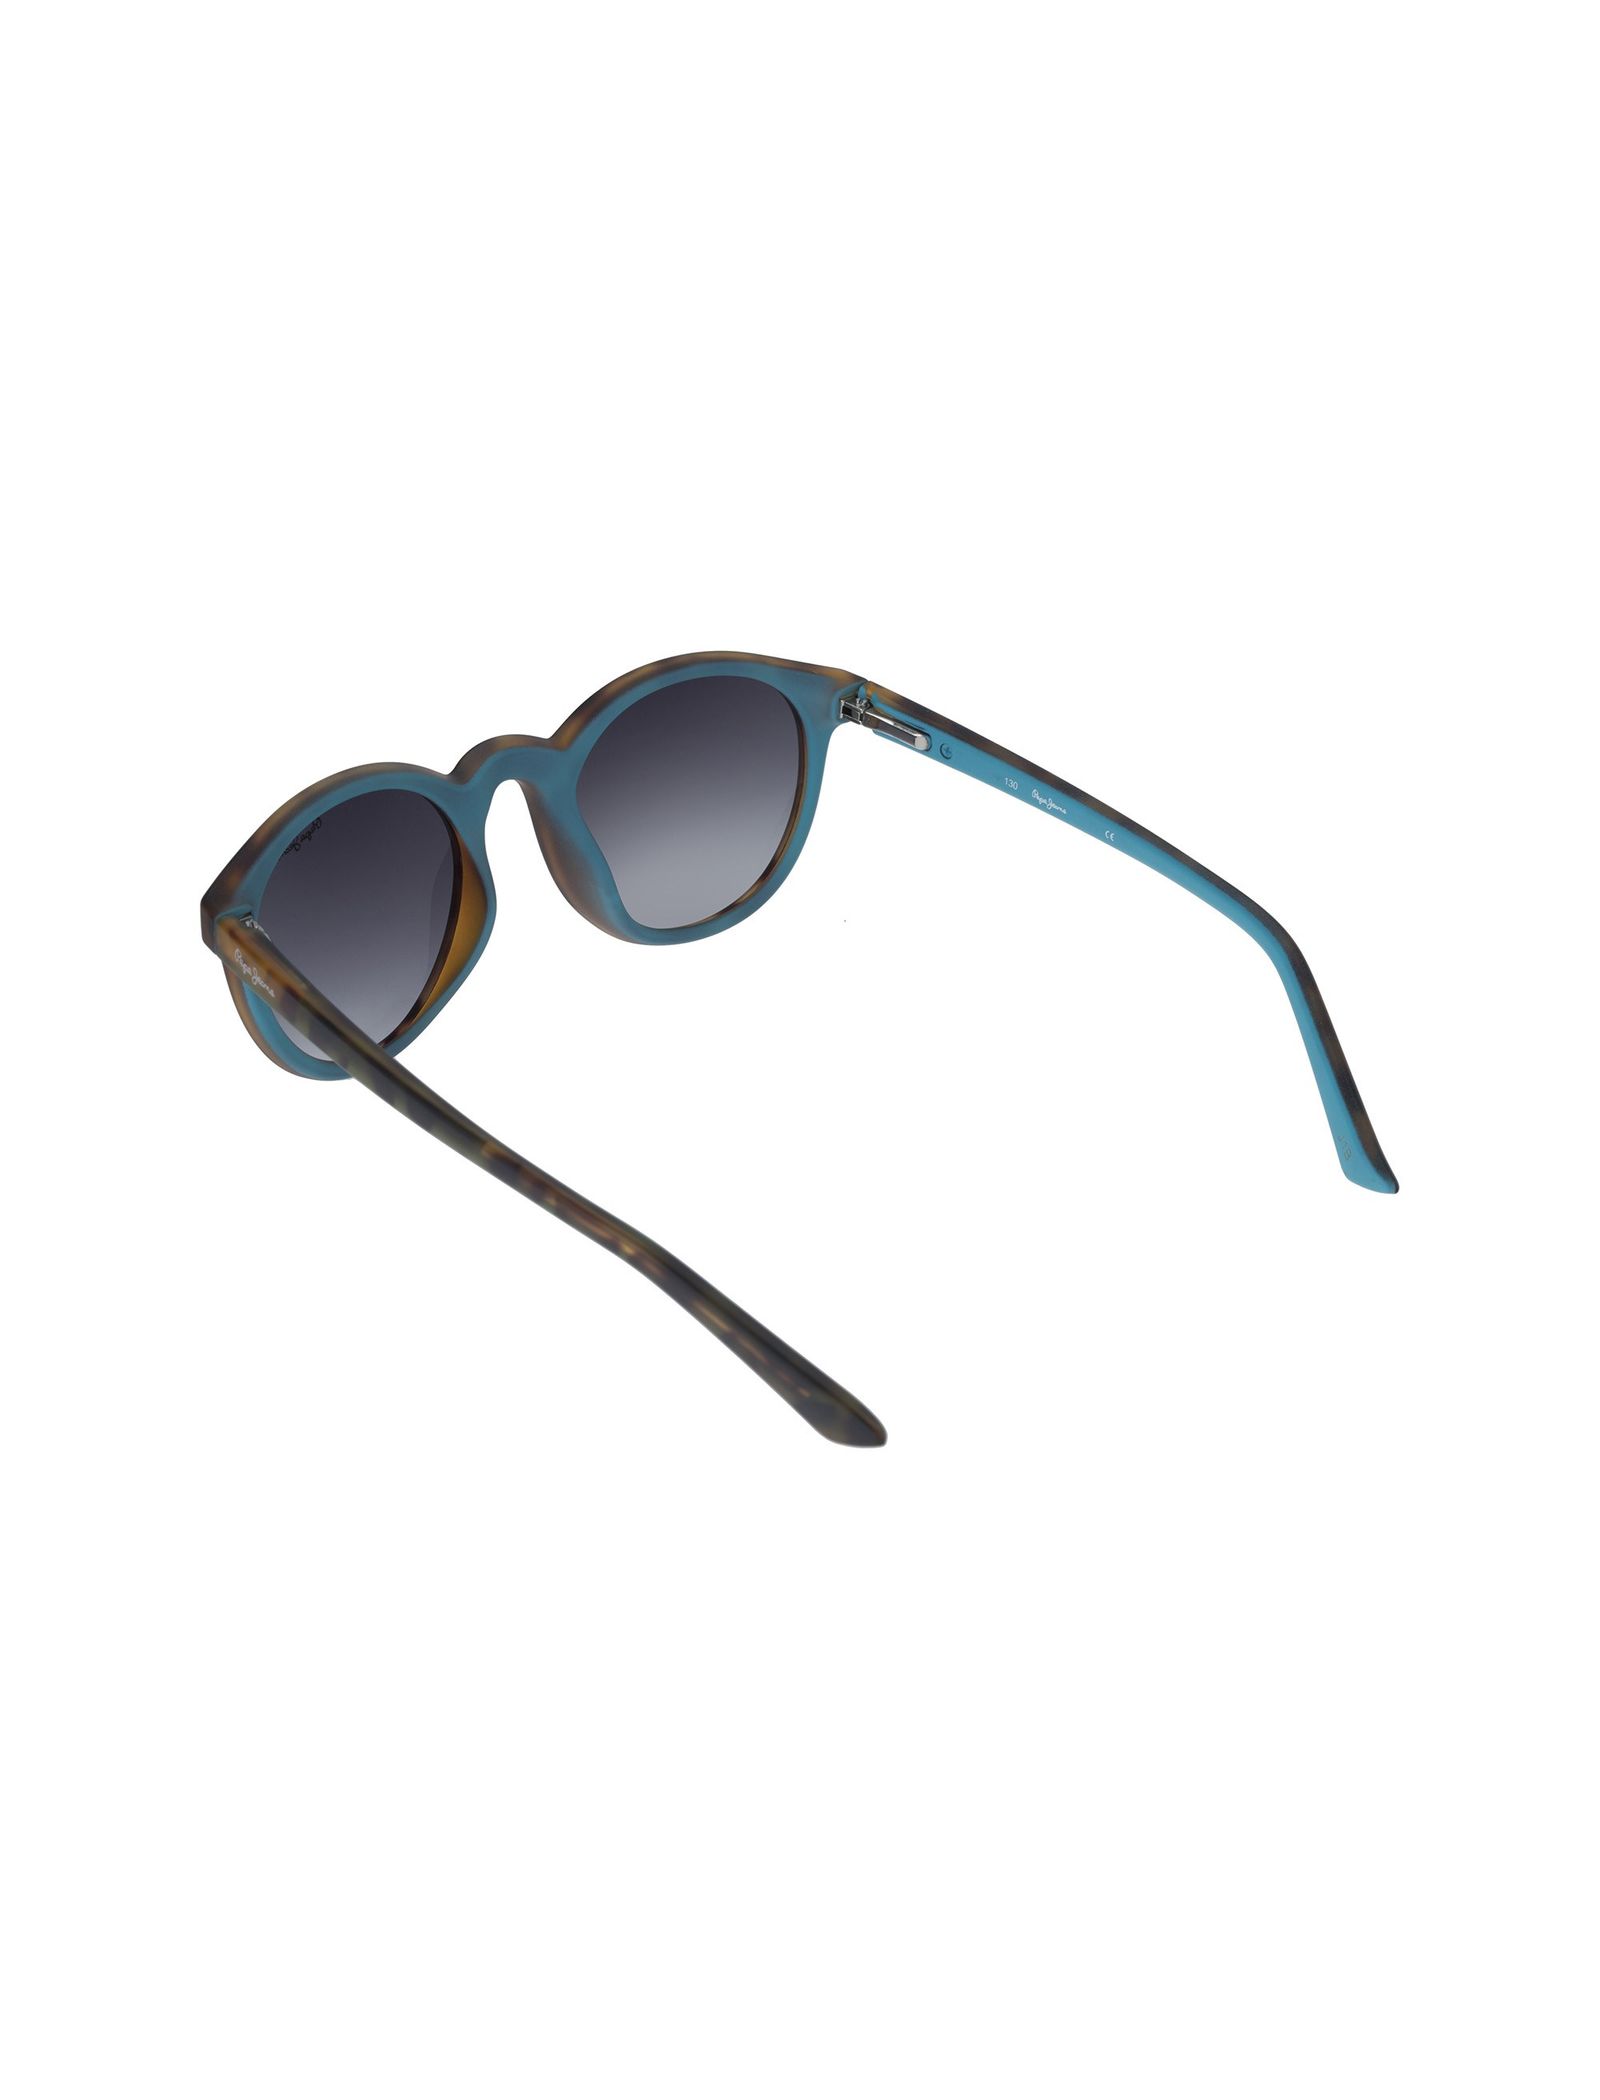 عینک آفتابی پنتوس بچگانه - پپه جینز - قهوه اي - 5